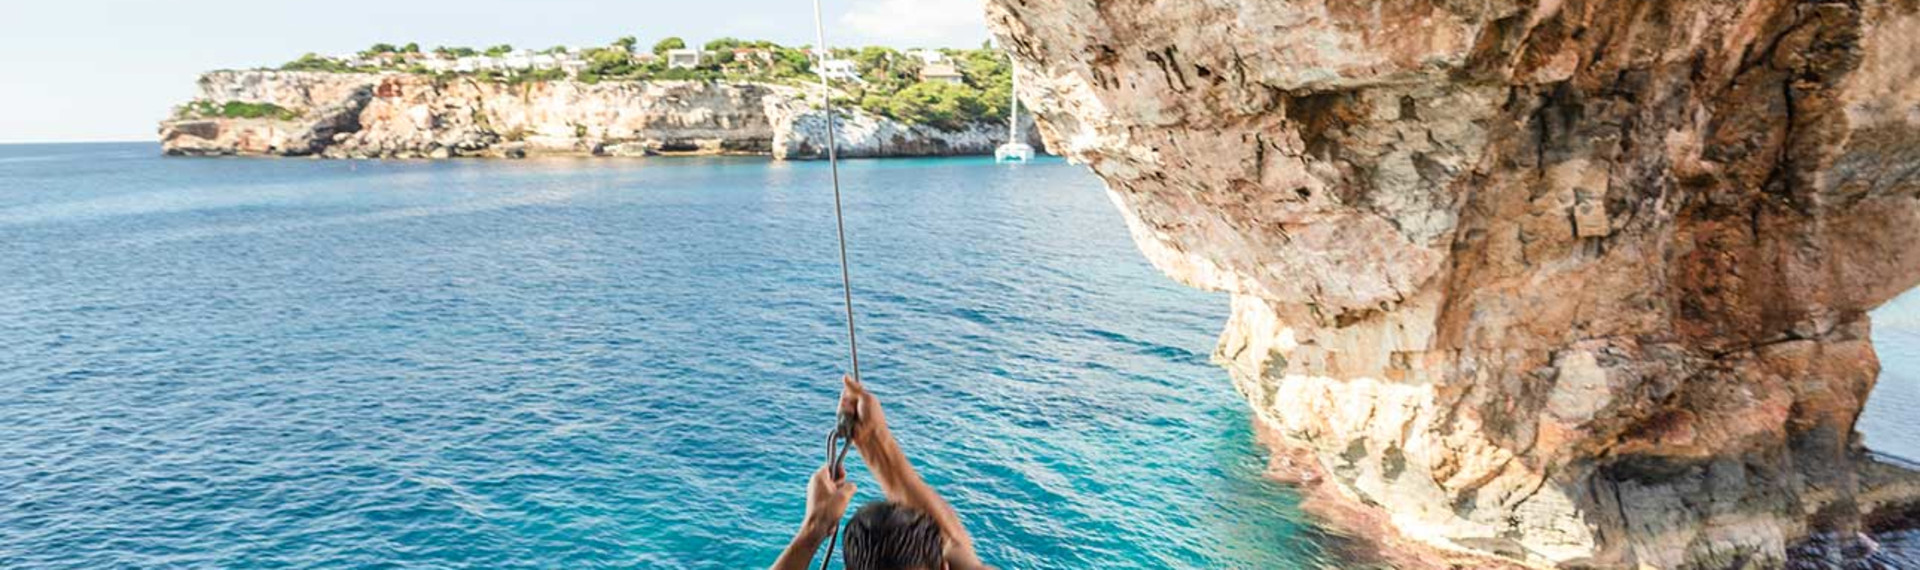 Coasteering Mallorca | Erobere Mallorcas Klippen | Pissup Reisen